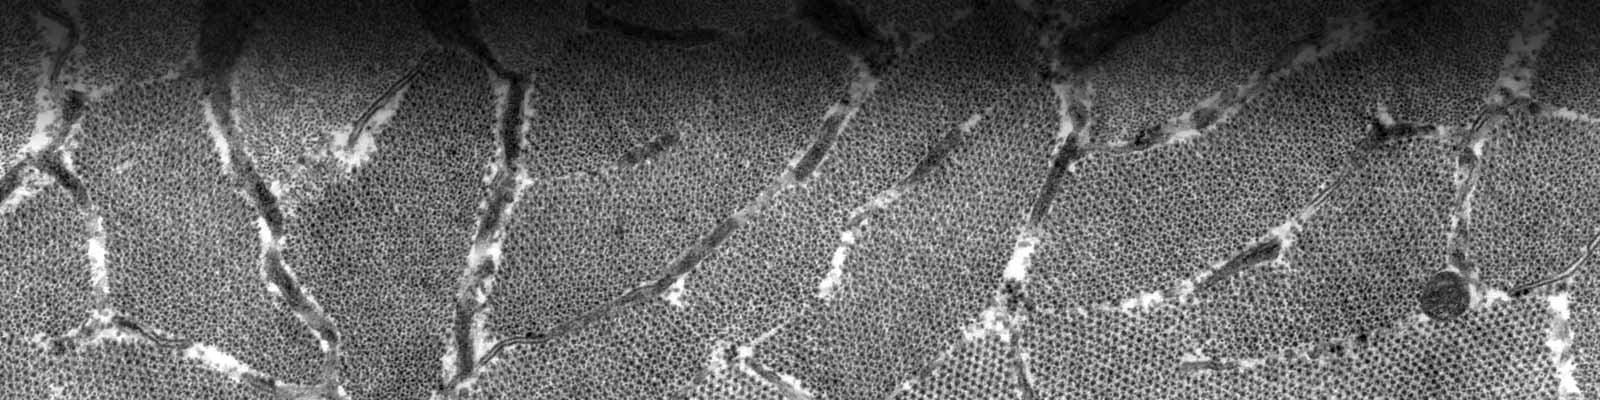 Películas para micrografías electrónicas de Carestream